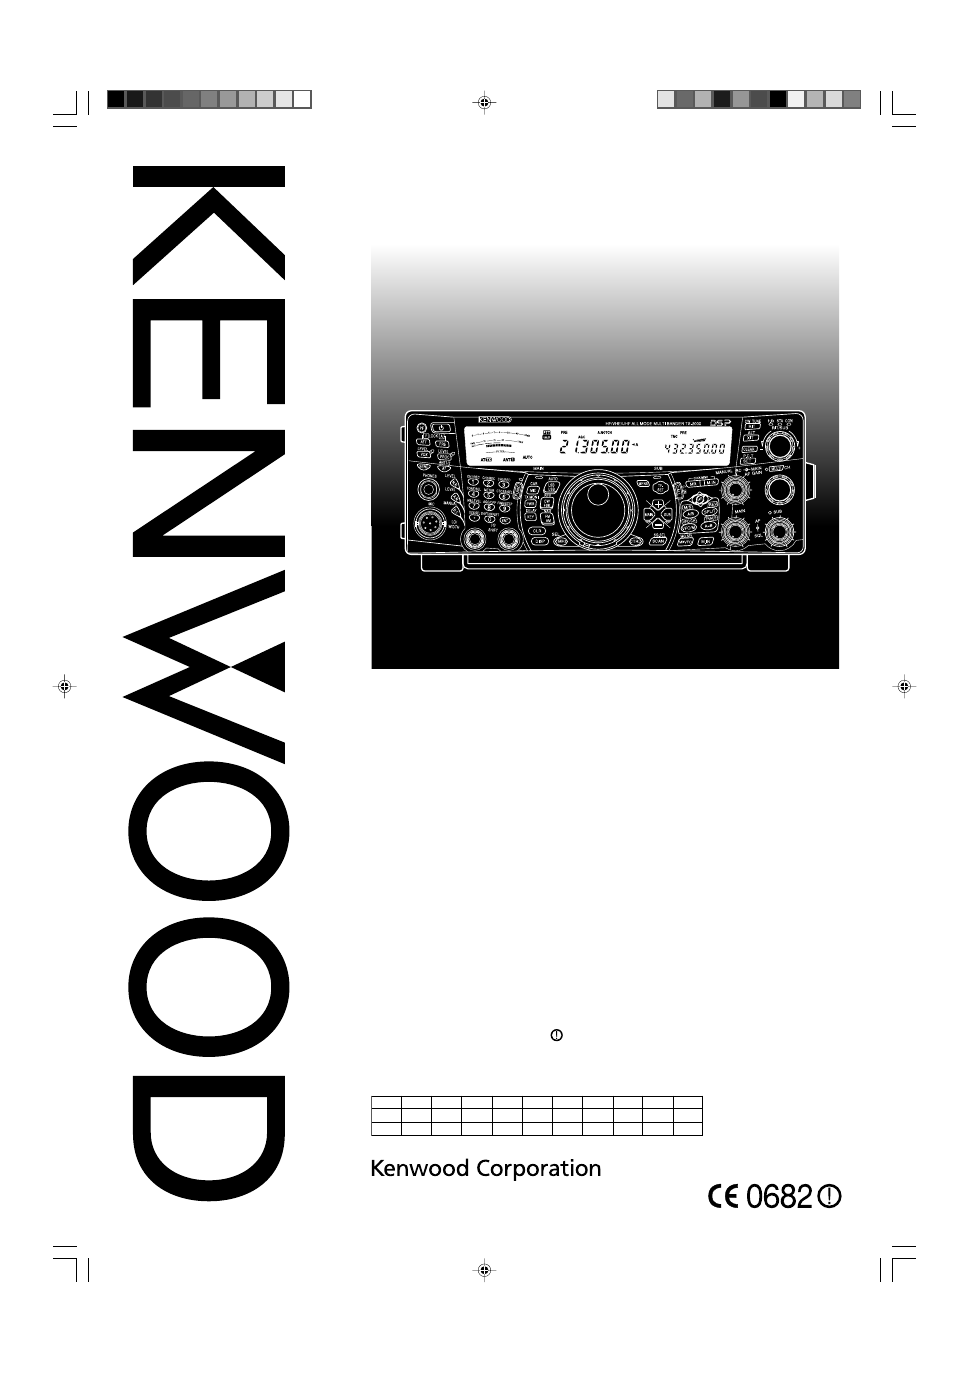 Ts 2000 kenwood owners manual